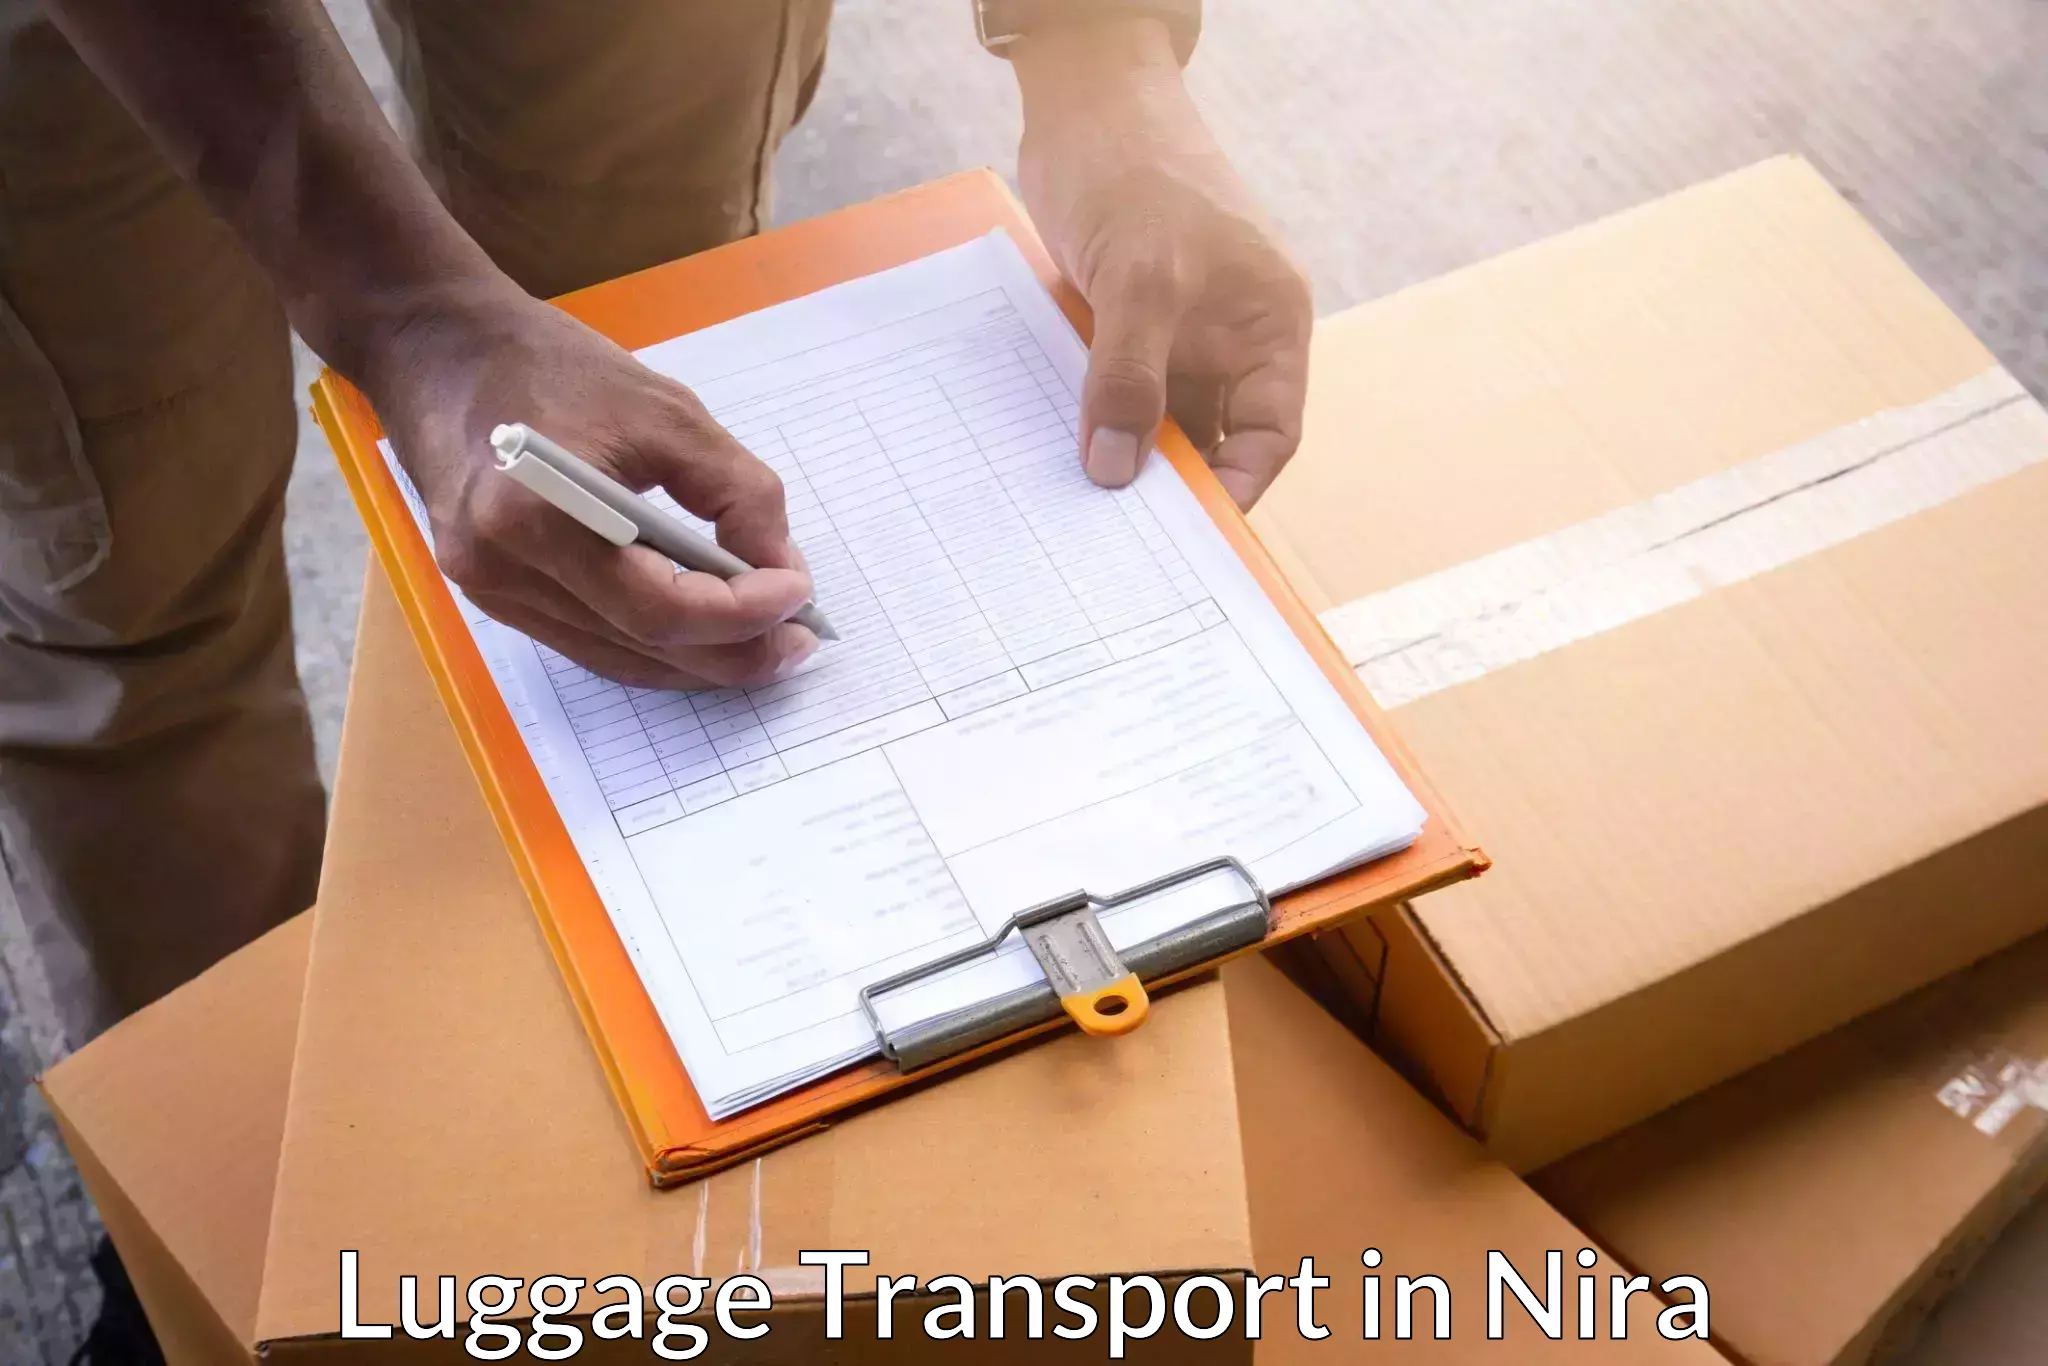 Luggage transport service in Nira